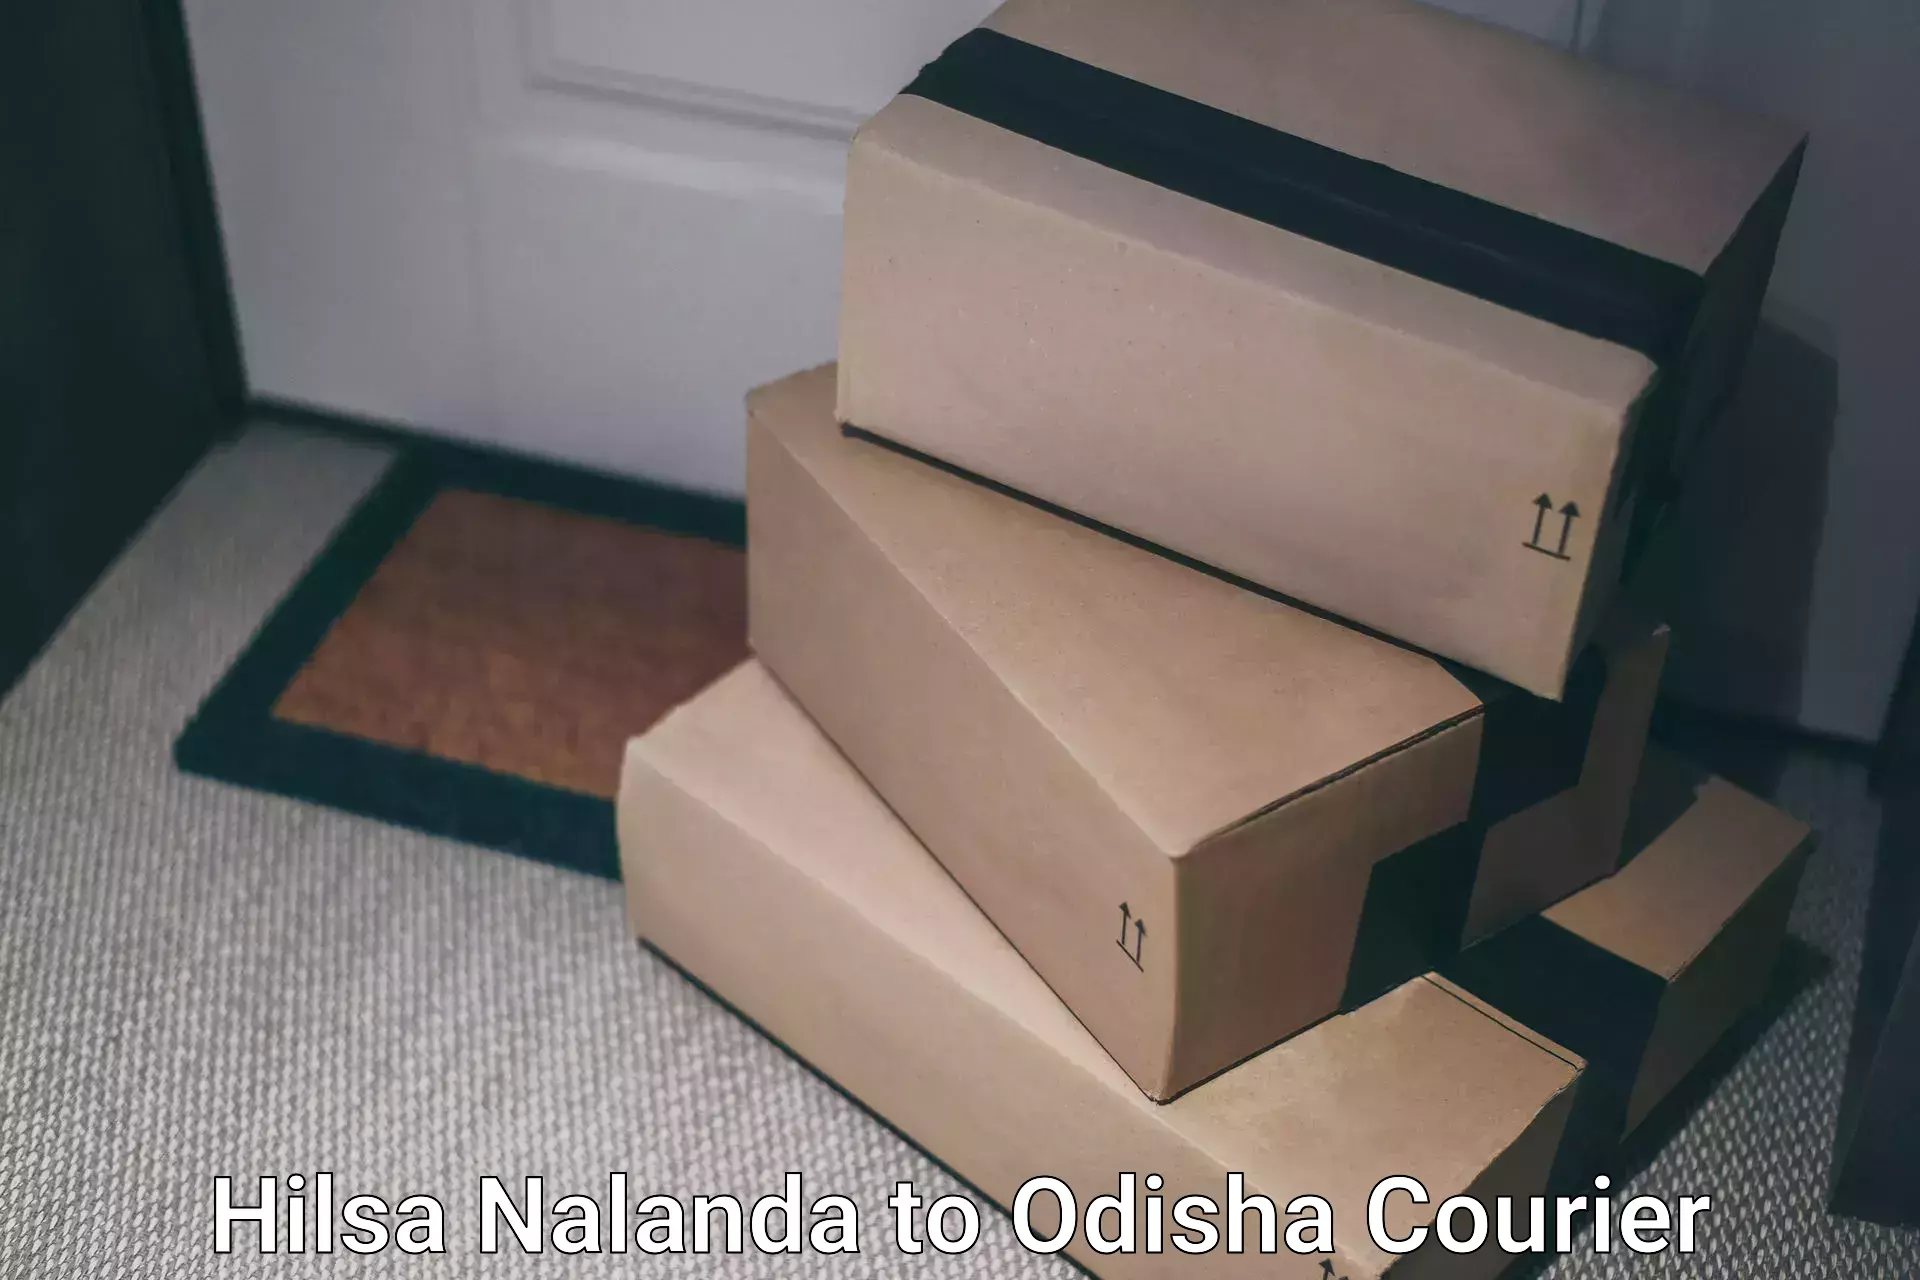 Next-day delivery options Hilsa Nalanda to Odisha